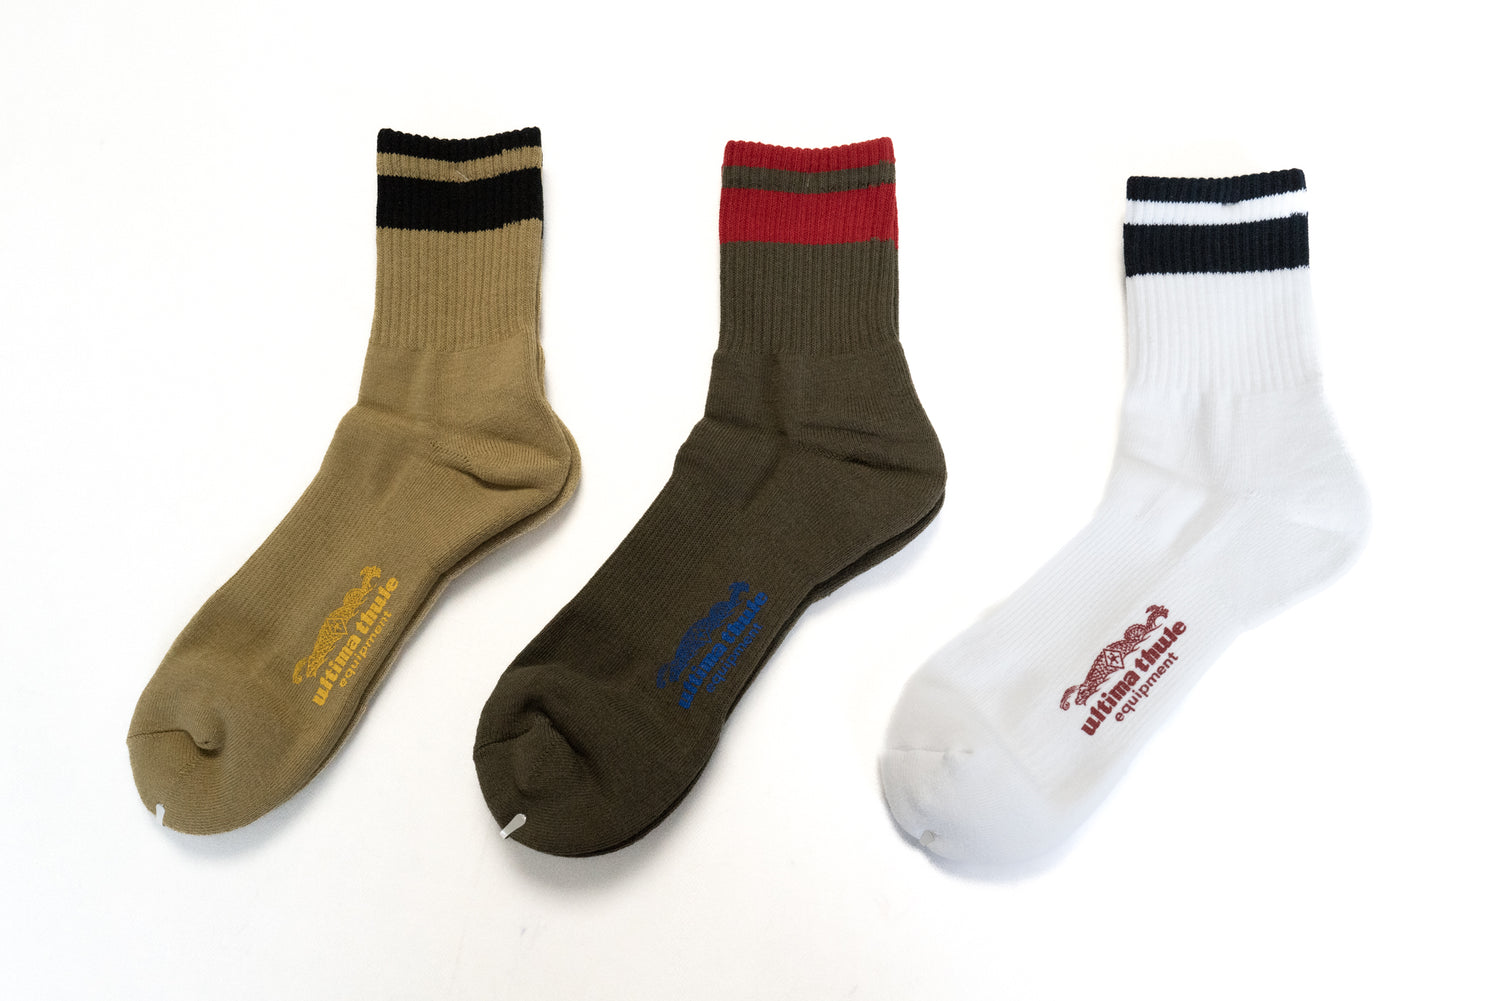 Freewheelers "Barlow" 6-inch Boot Socks